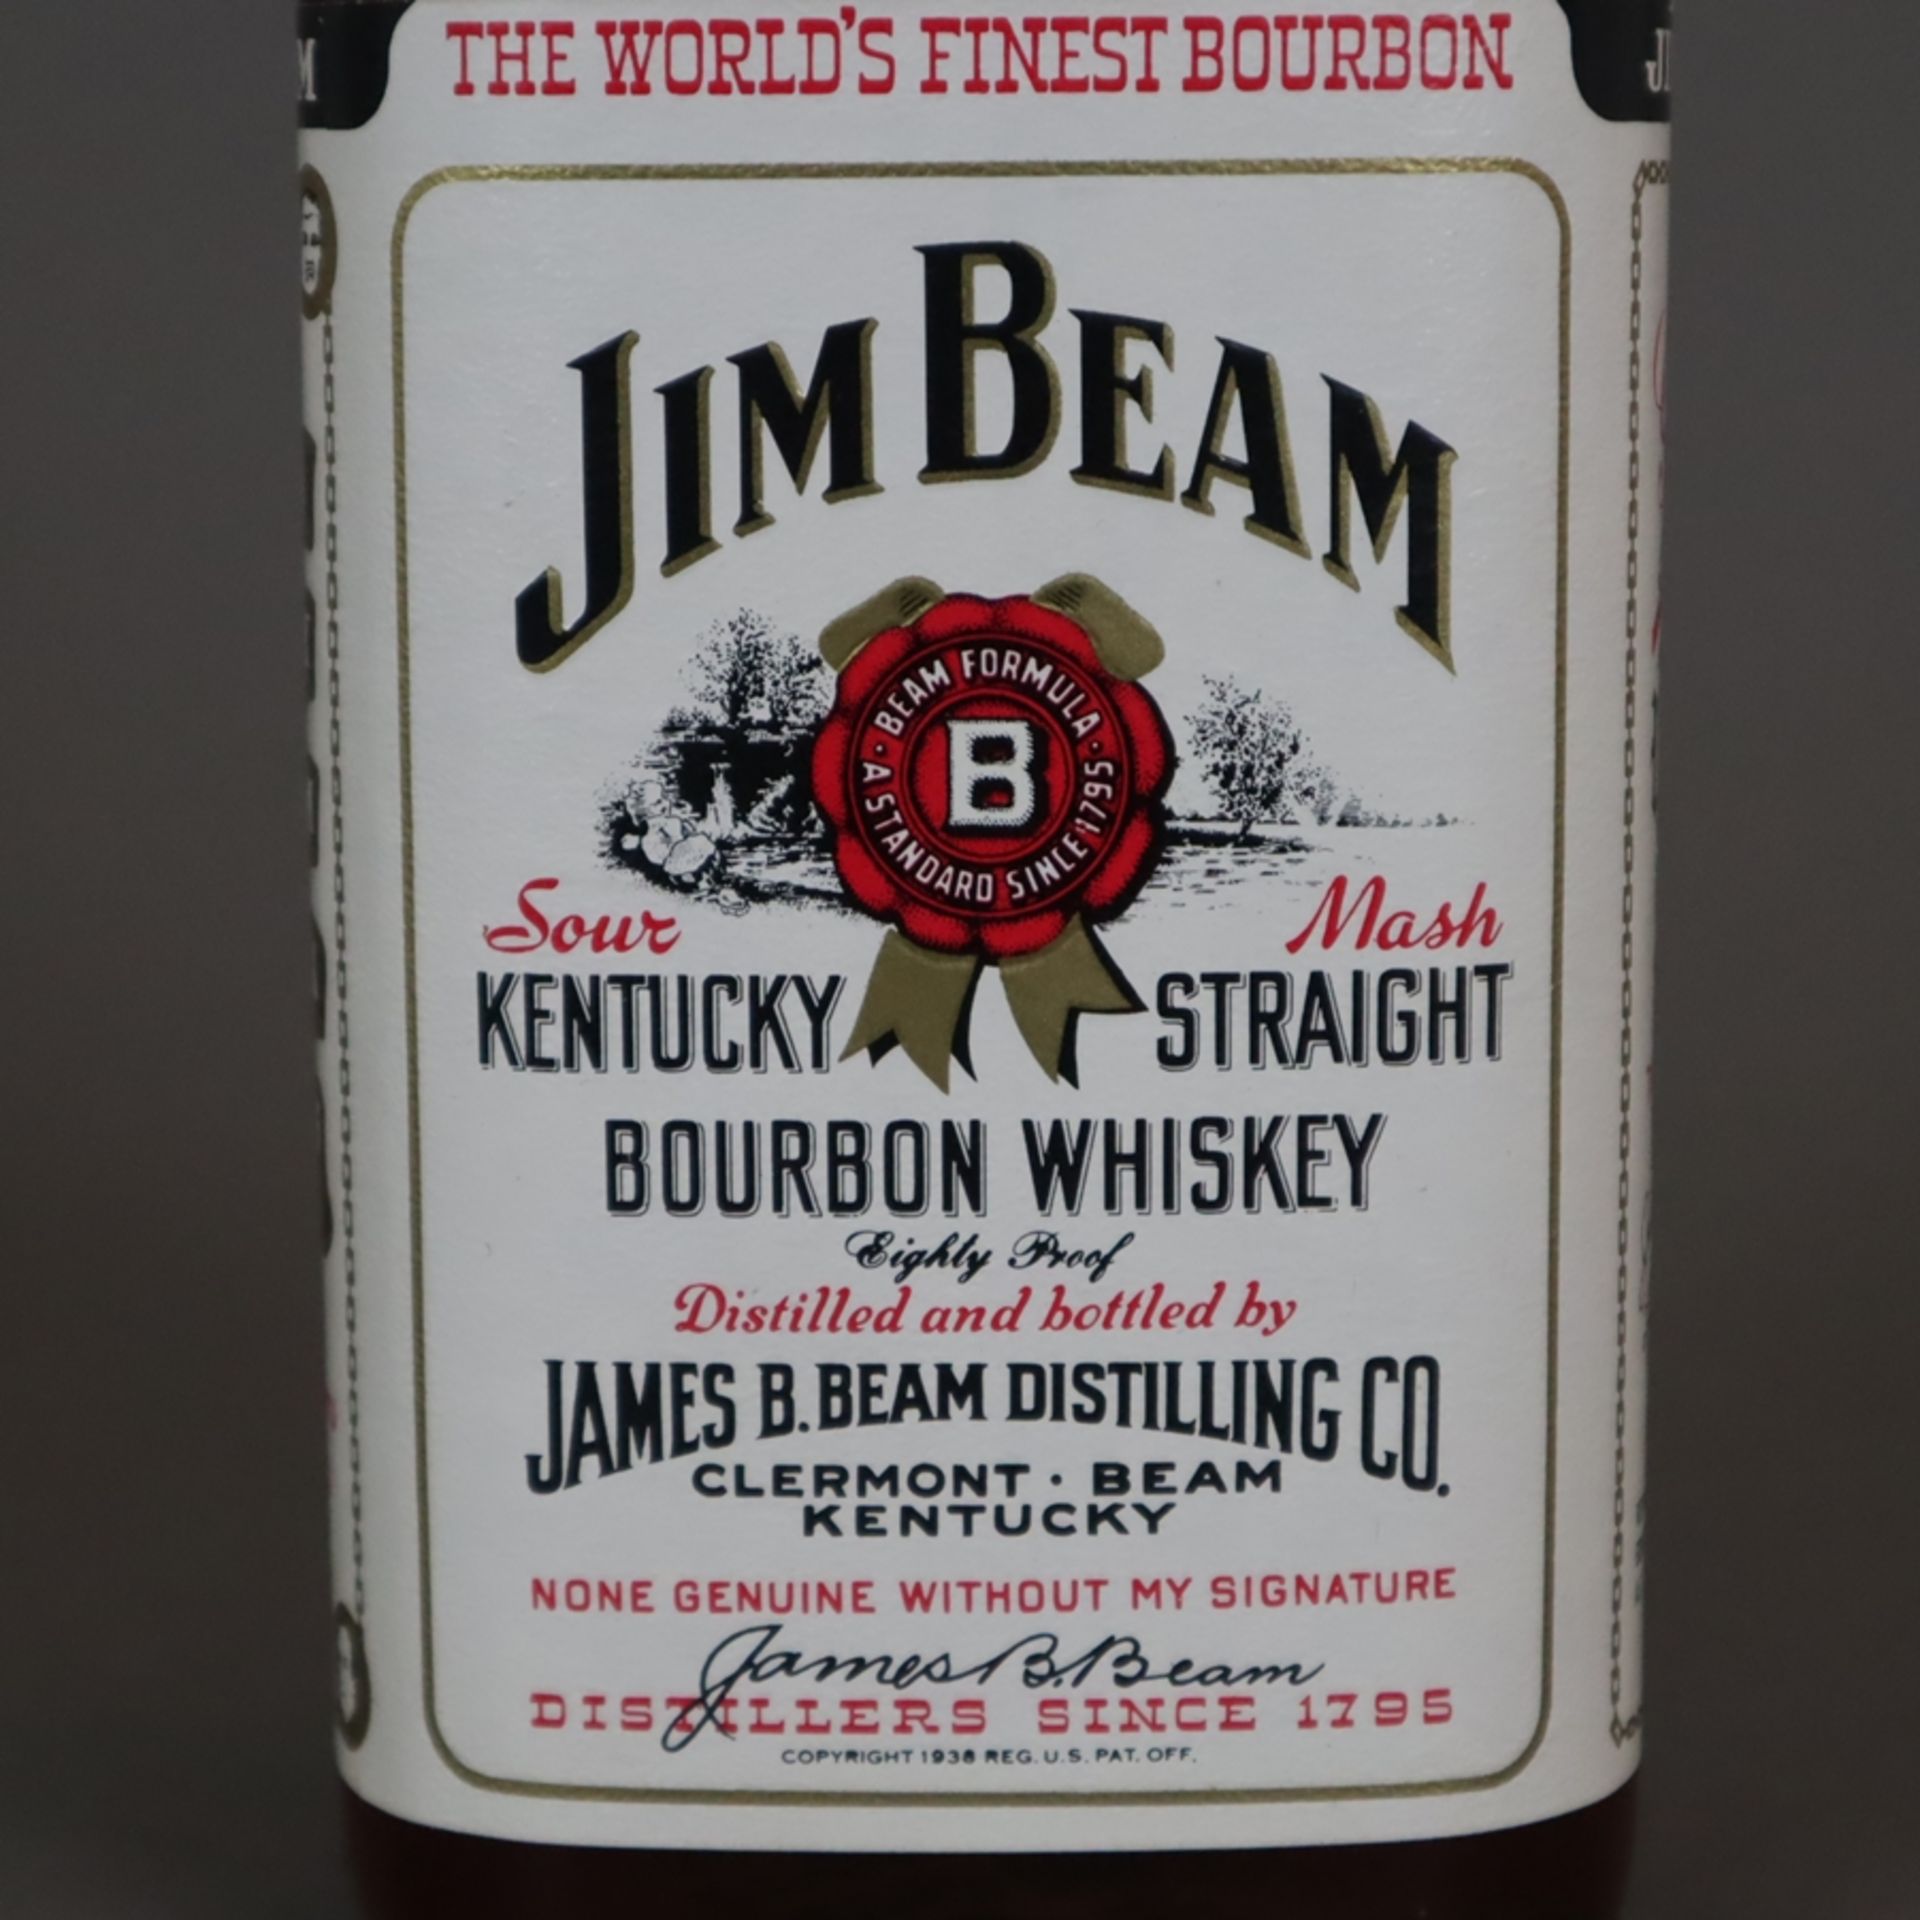 Whiskey - Jim Beam 1,75 Liter Bourbon Whiskey in Henkelflasche, distilled in Kentucky - Image 3 of 7